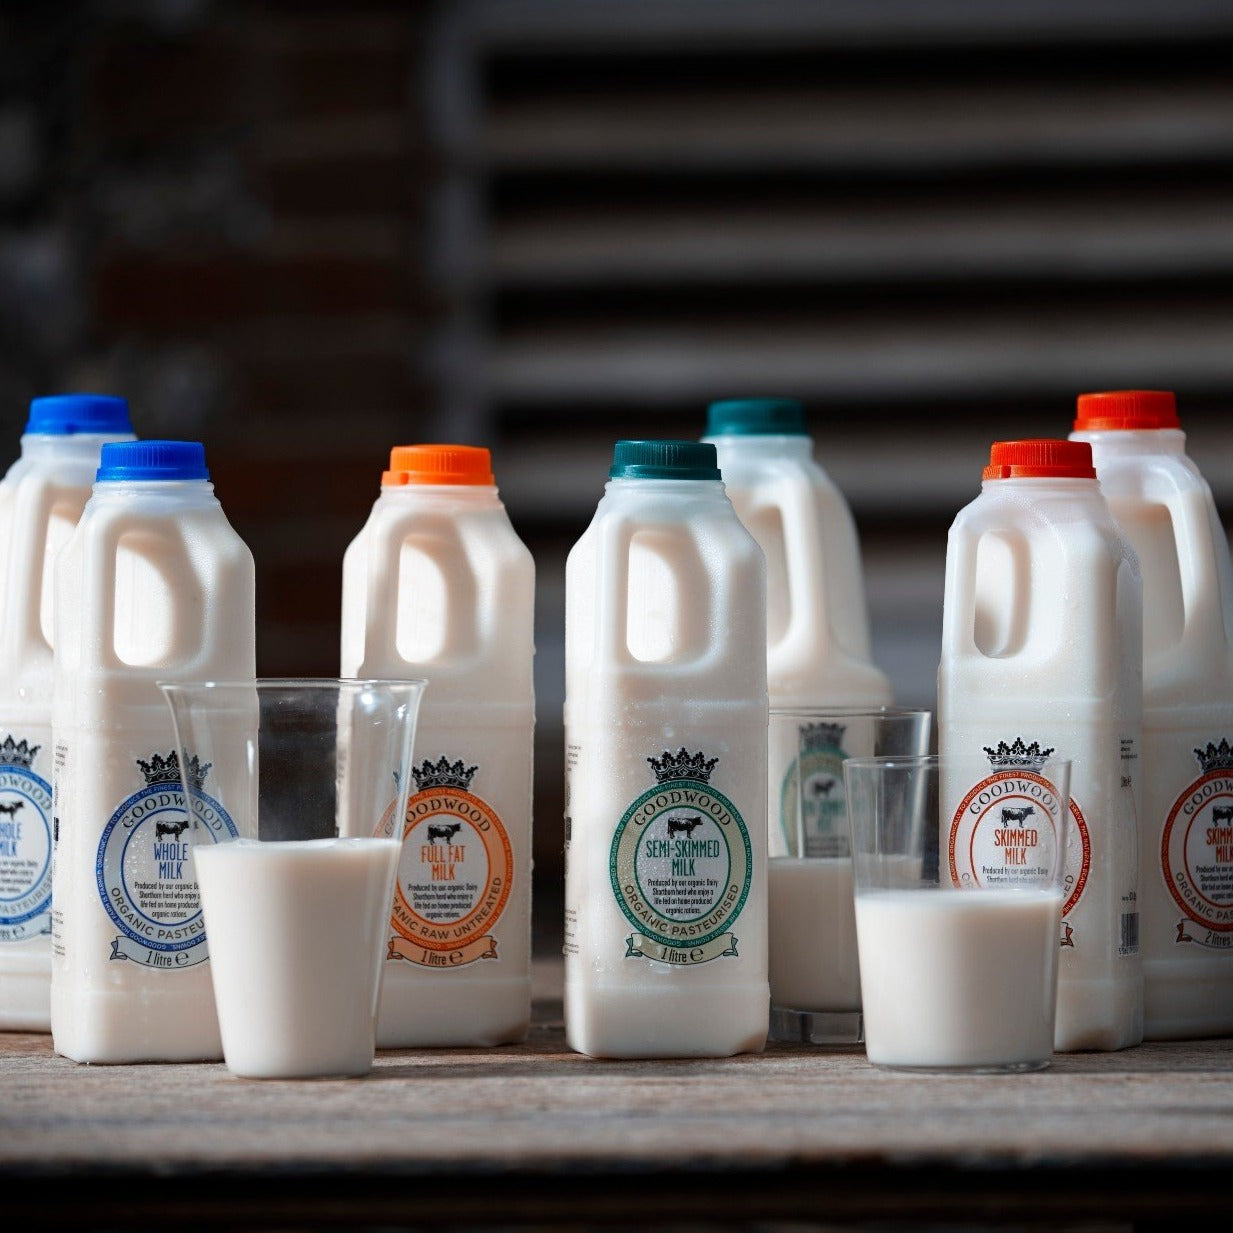 The variations available of Goodwood Organic Milk  - whole milk, semi-skimmed milk and skimmed milk.